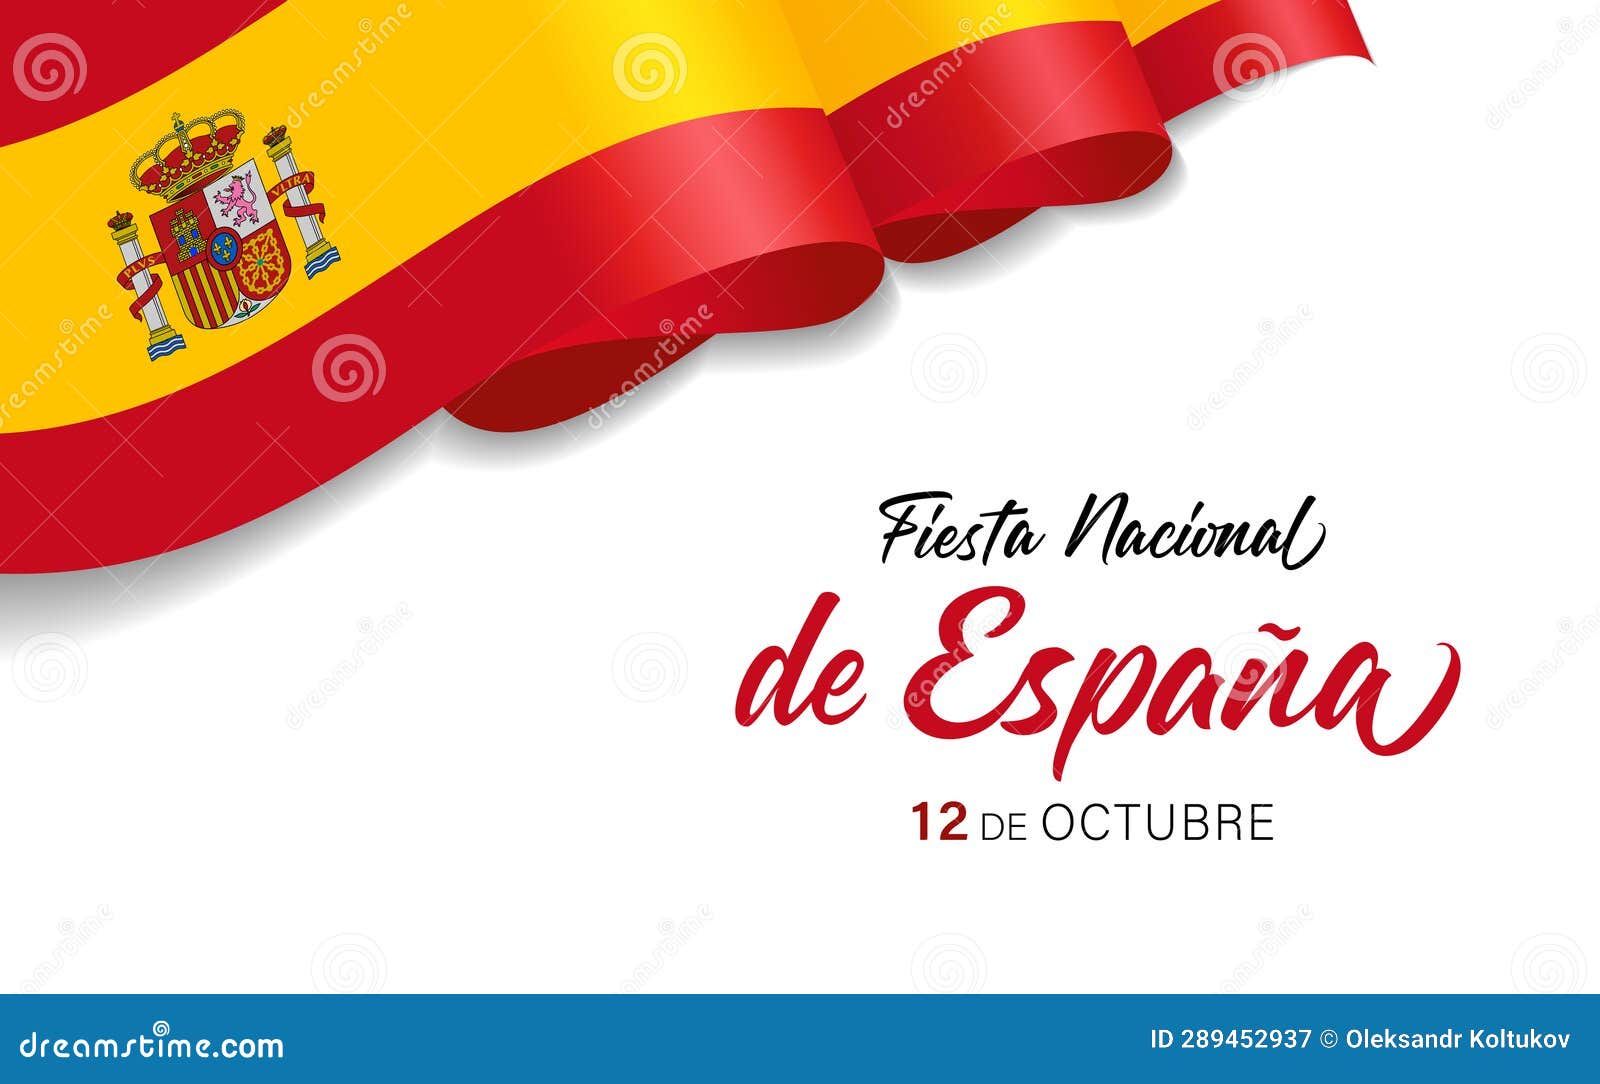 fiesta nacional de espana, 12 de octubre with 3d spain wave flag